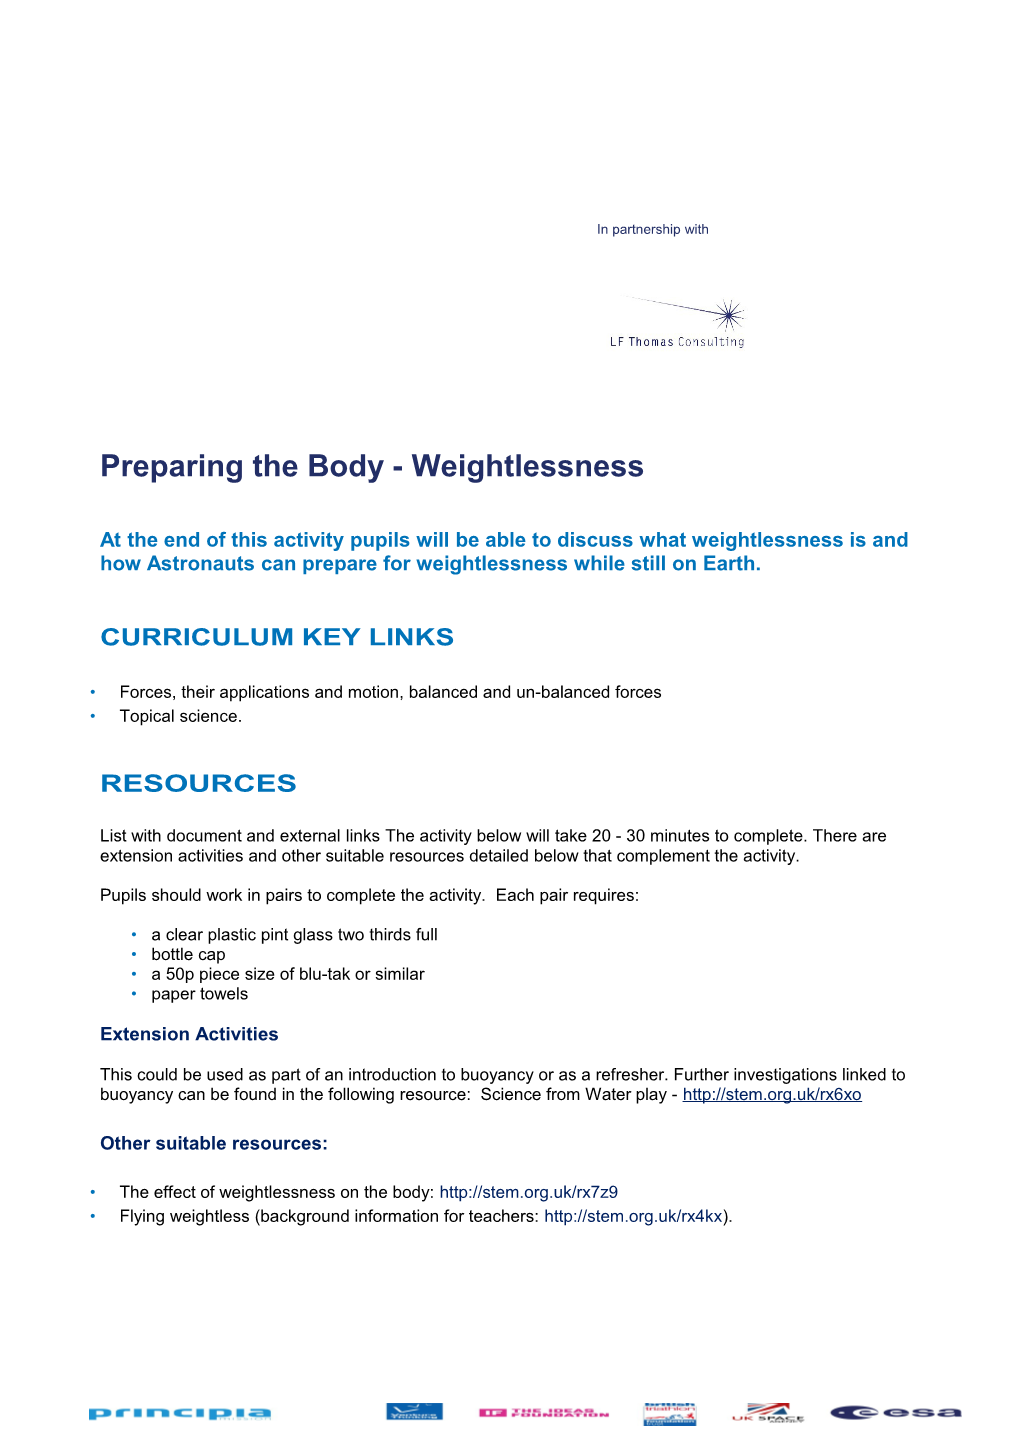 Preparing the Body - Weightlessness